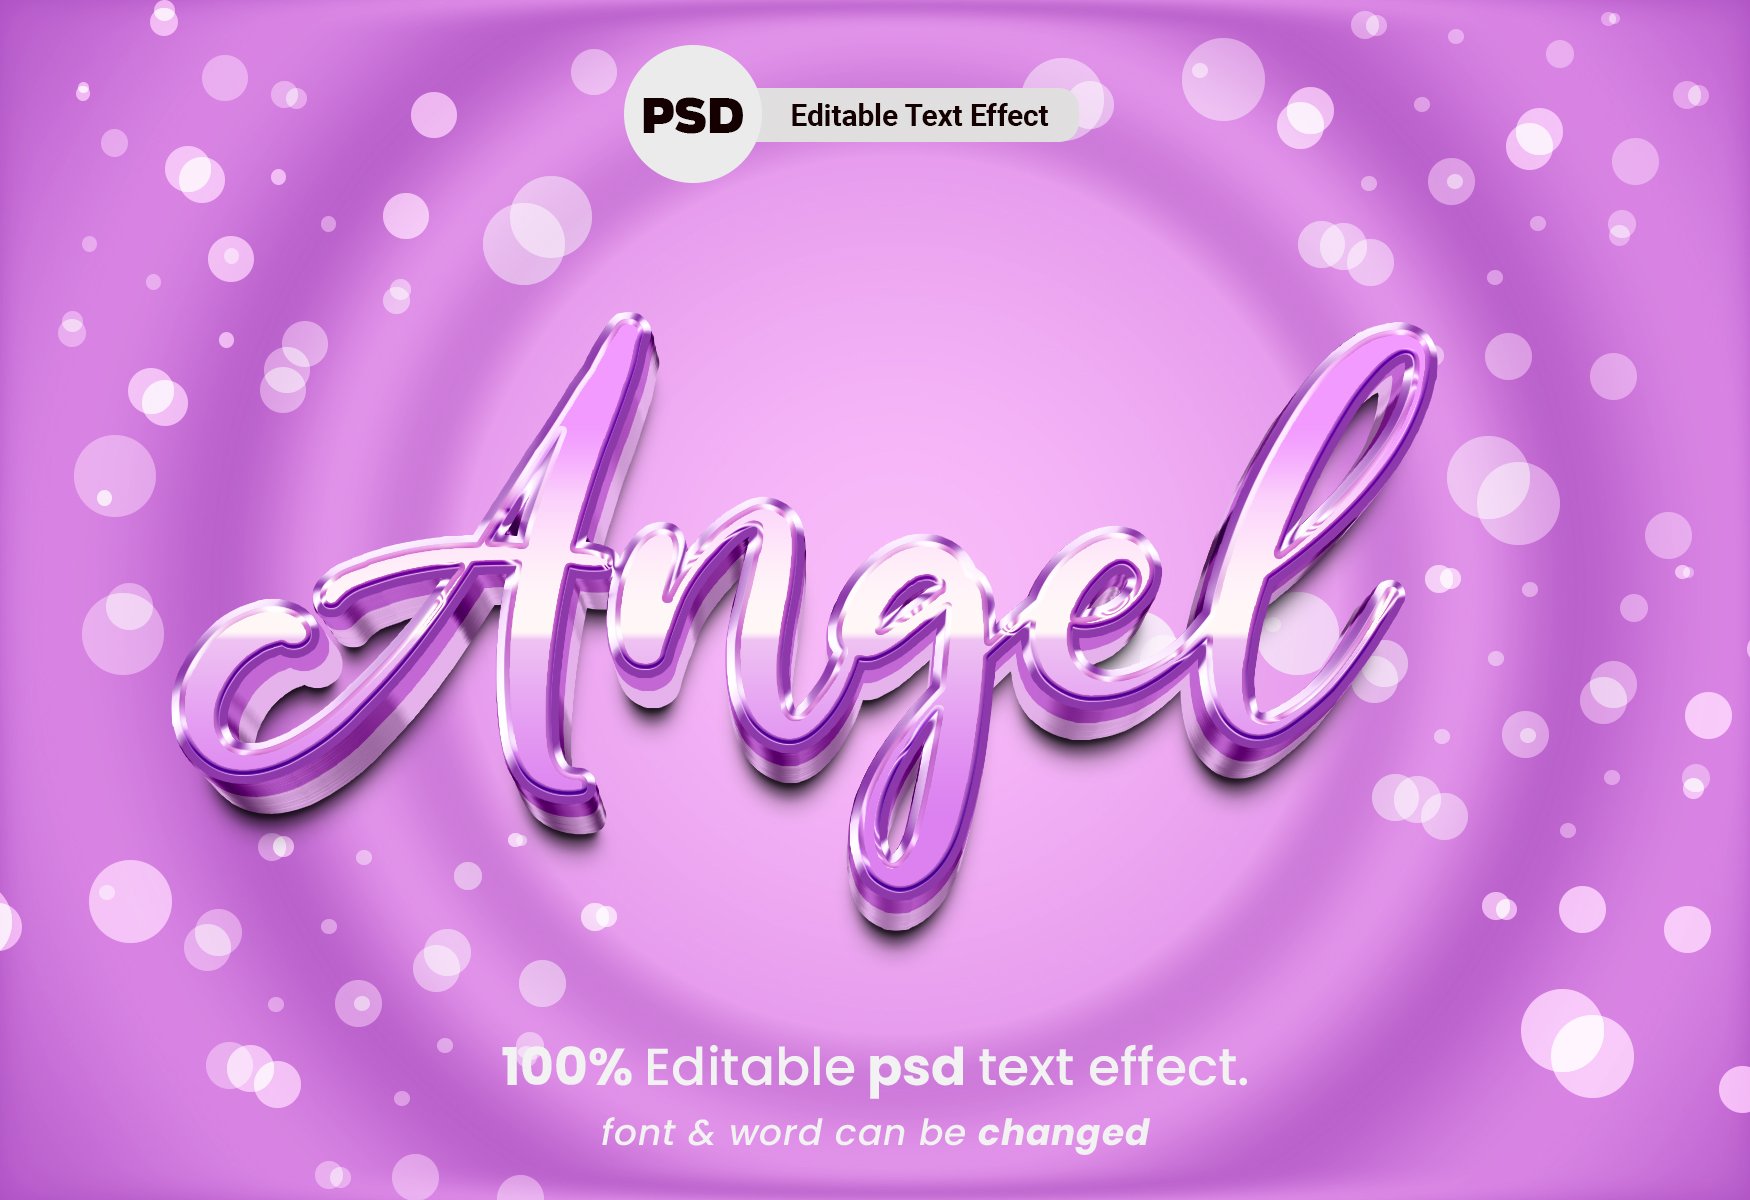 Angel 3D editable PSD text effectcover image.